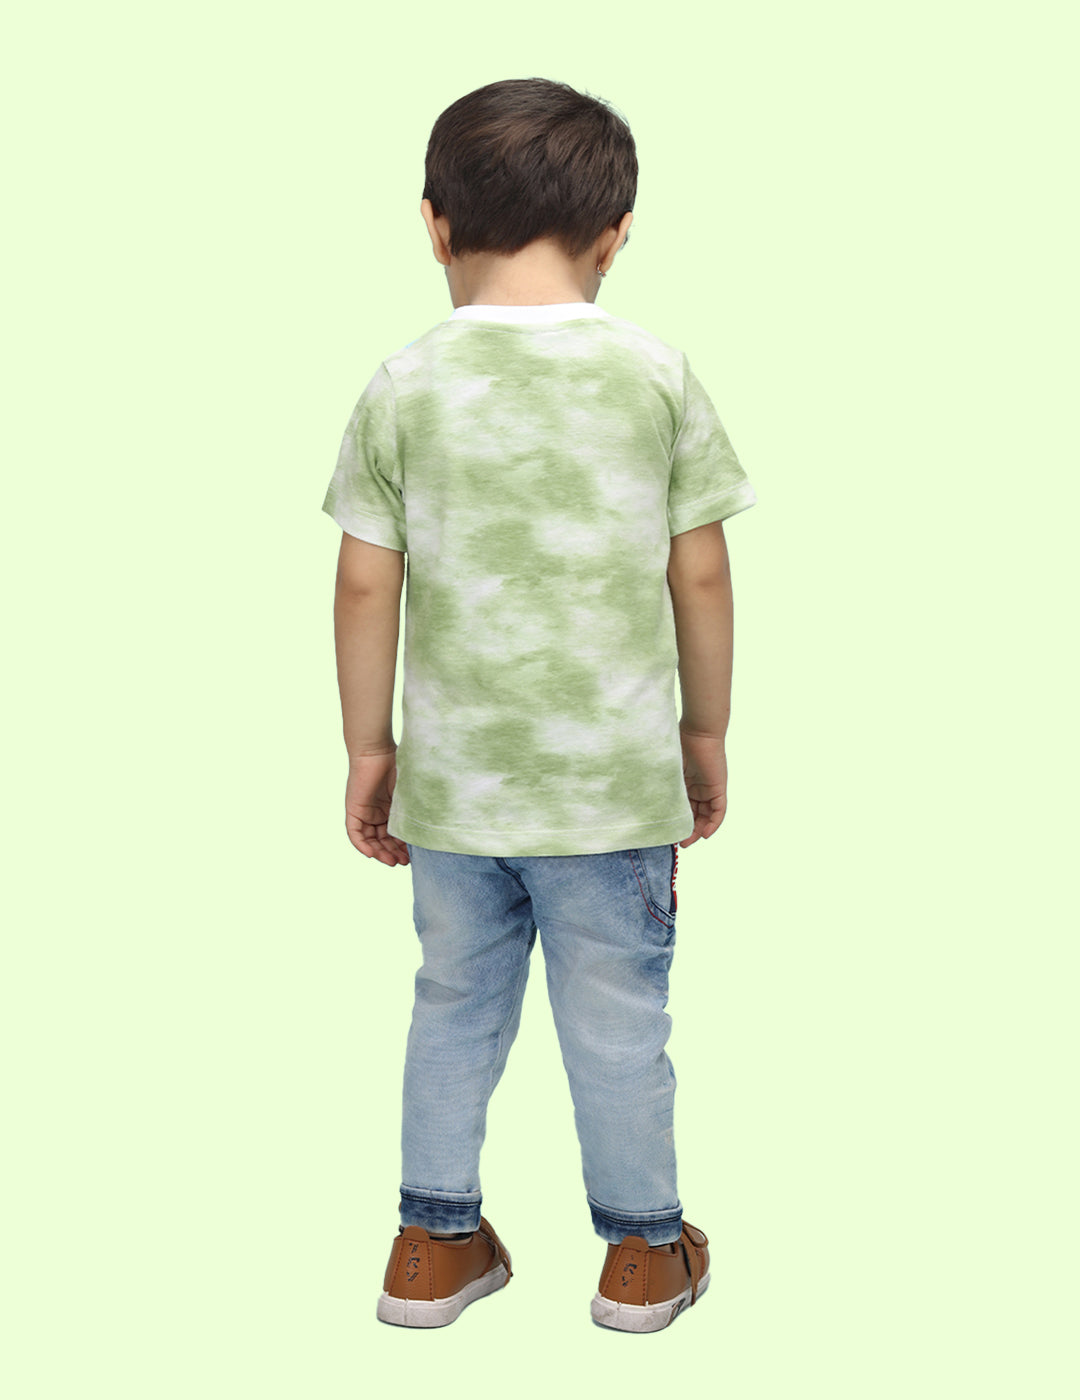 Nusyl infants green little dreamer printed Tie & Dye tshirt.